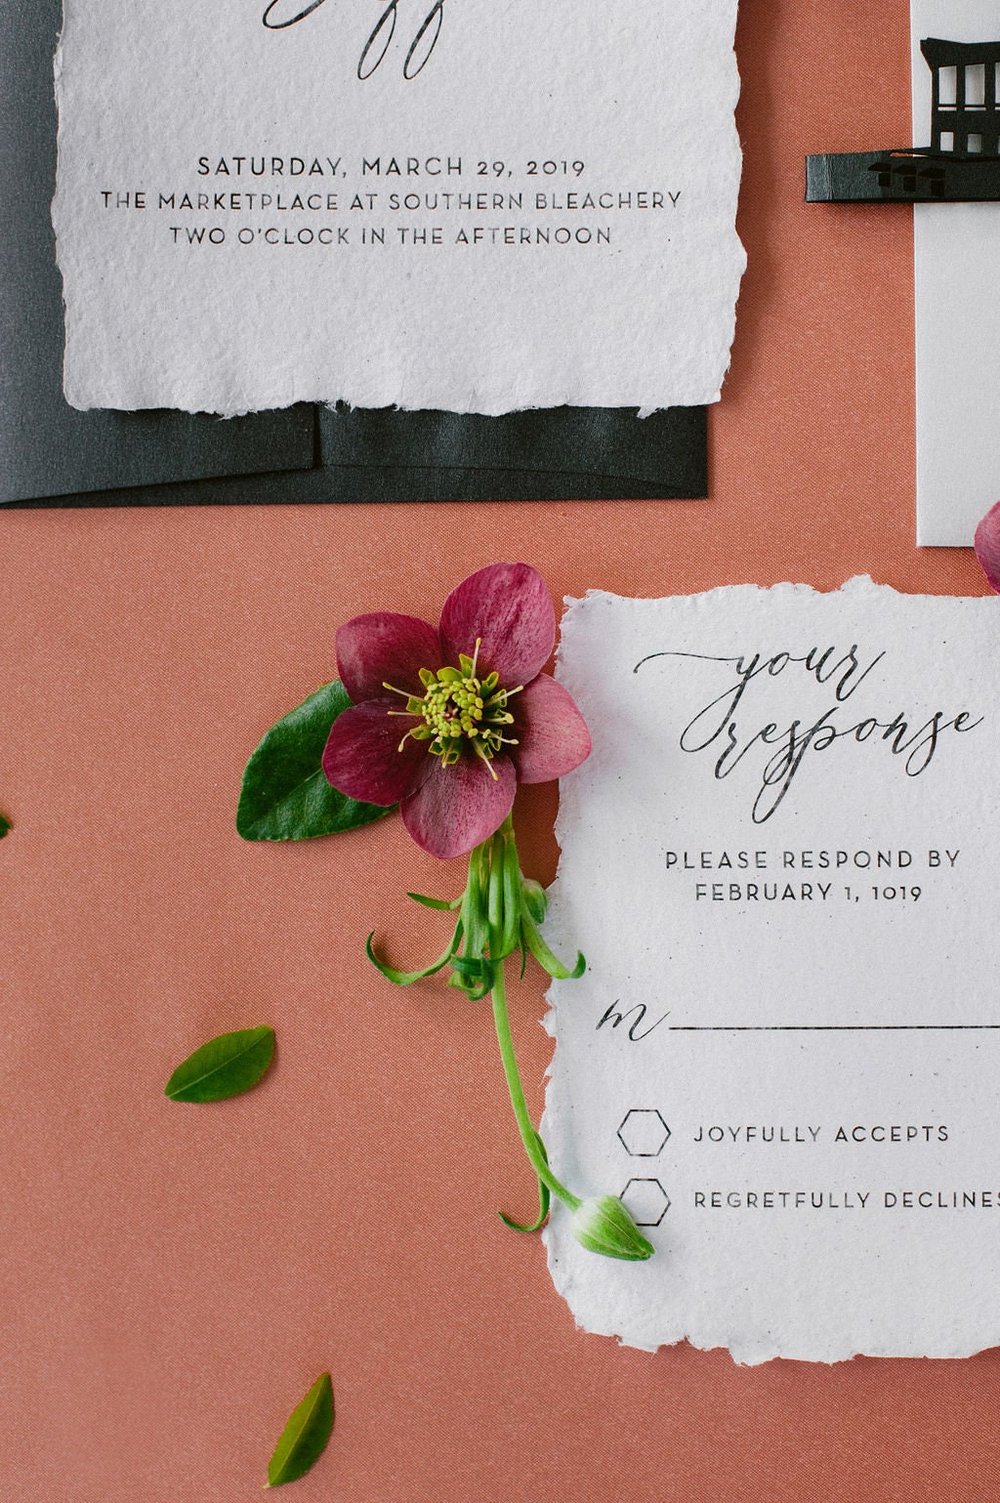 Handmade Paper Wedding Invitation, Deckled Edge Paper, Torn Edge